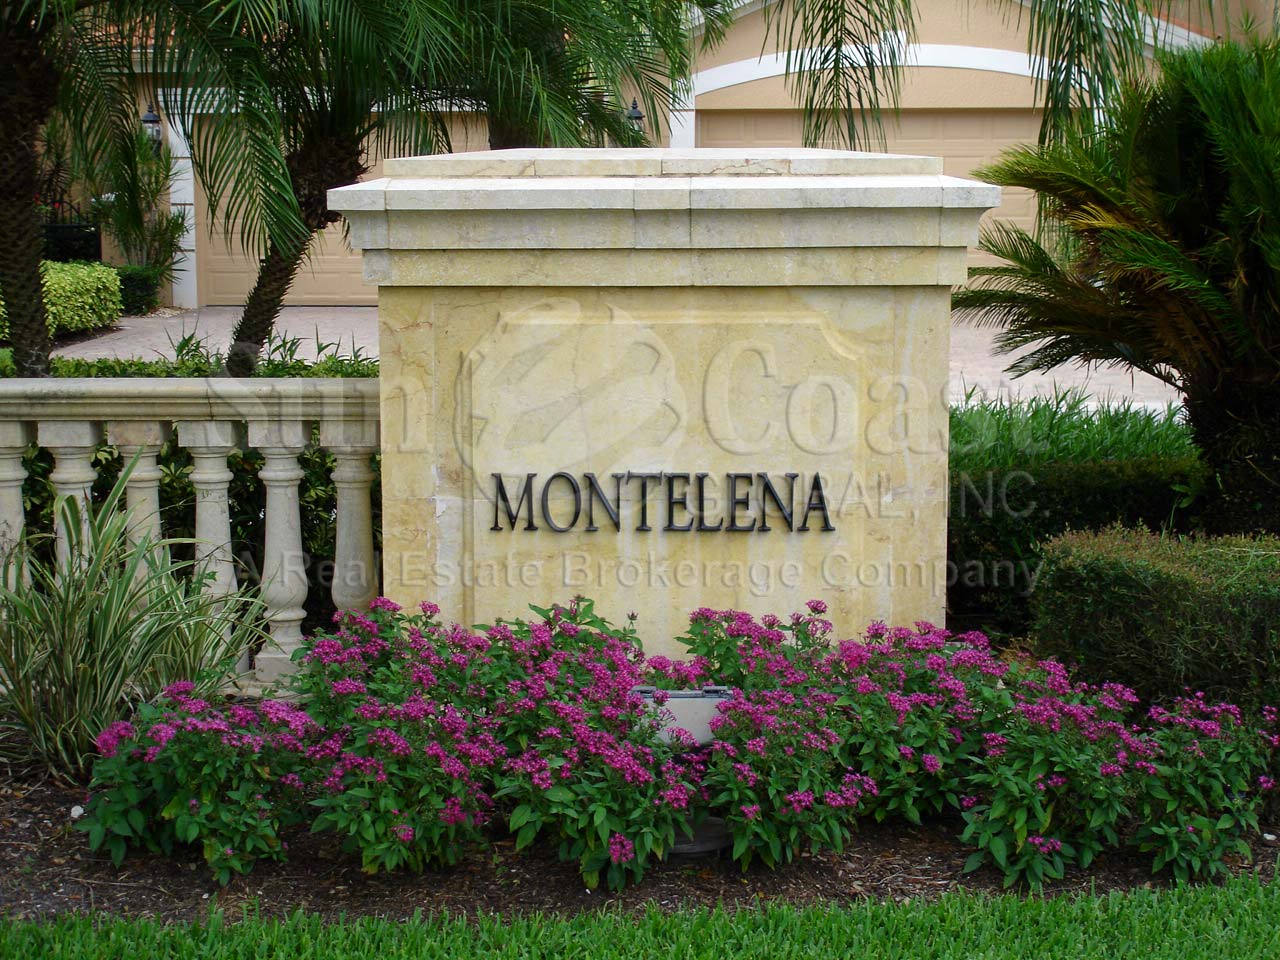 Montelena signage